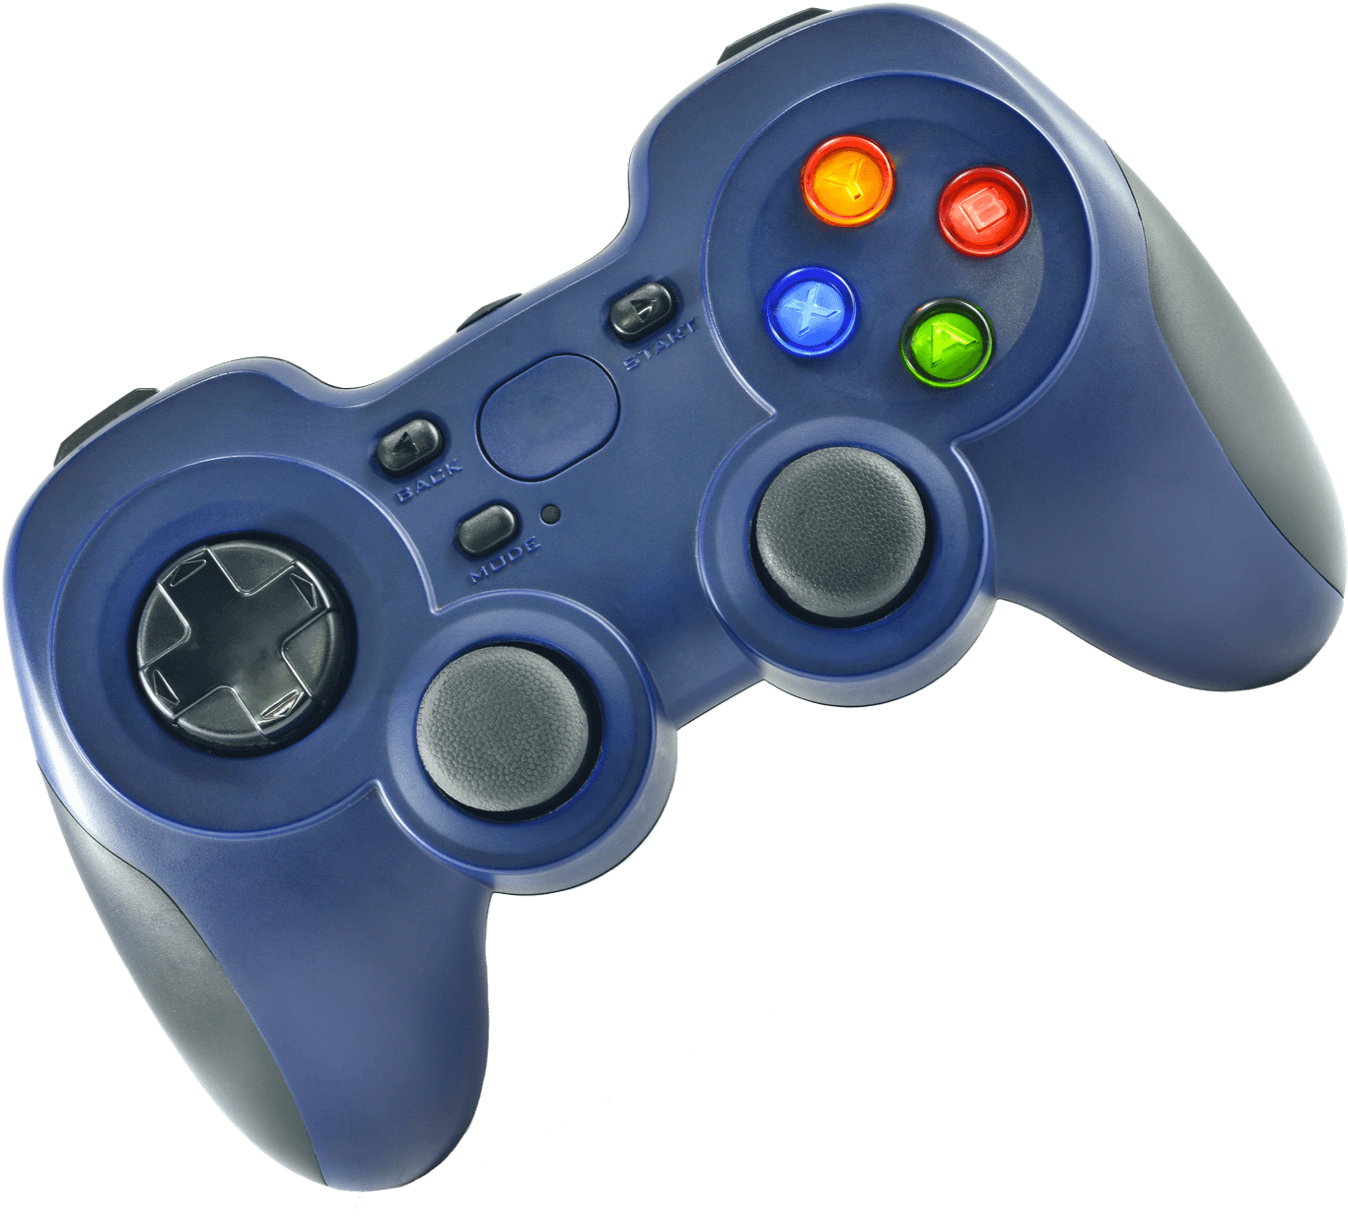 A Blue Video Game Controller